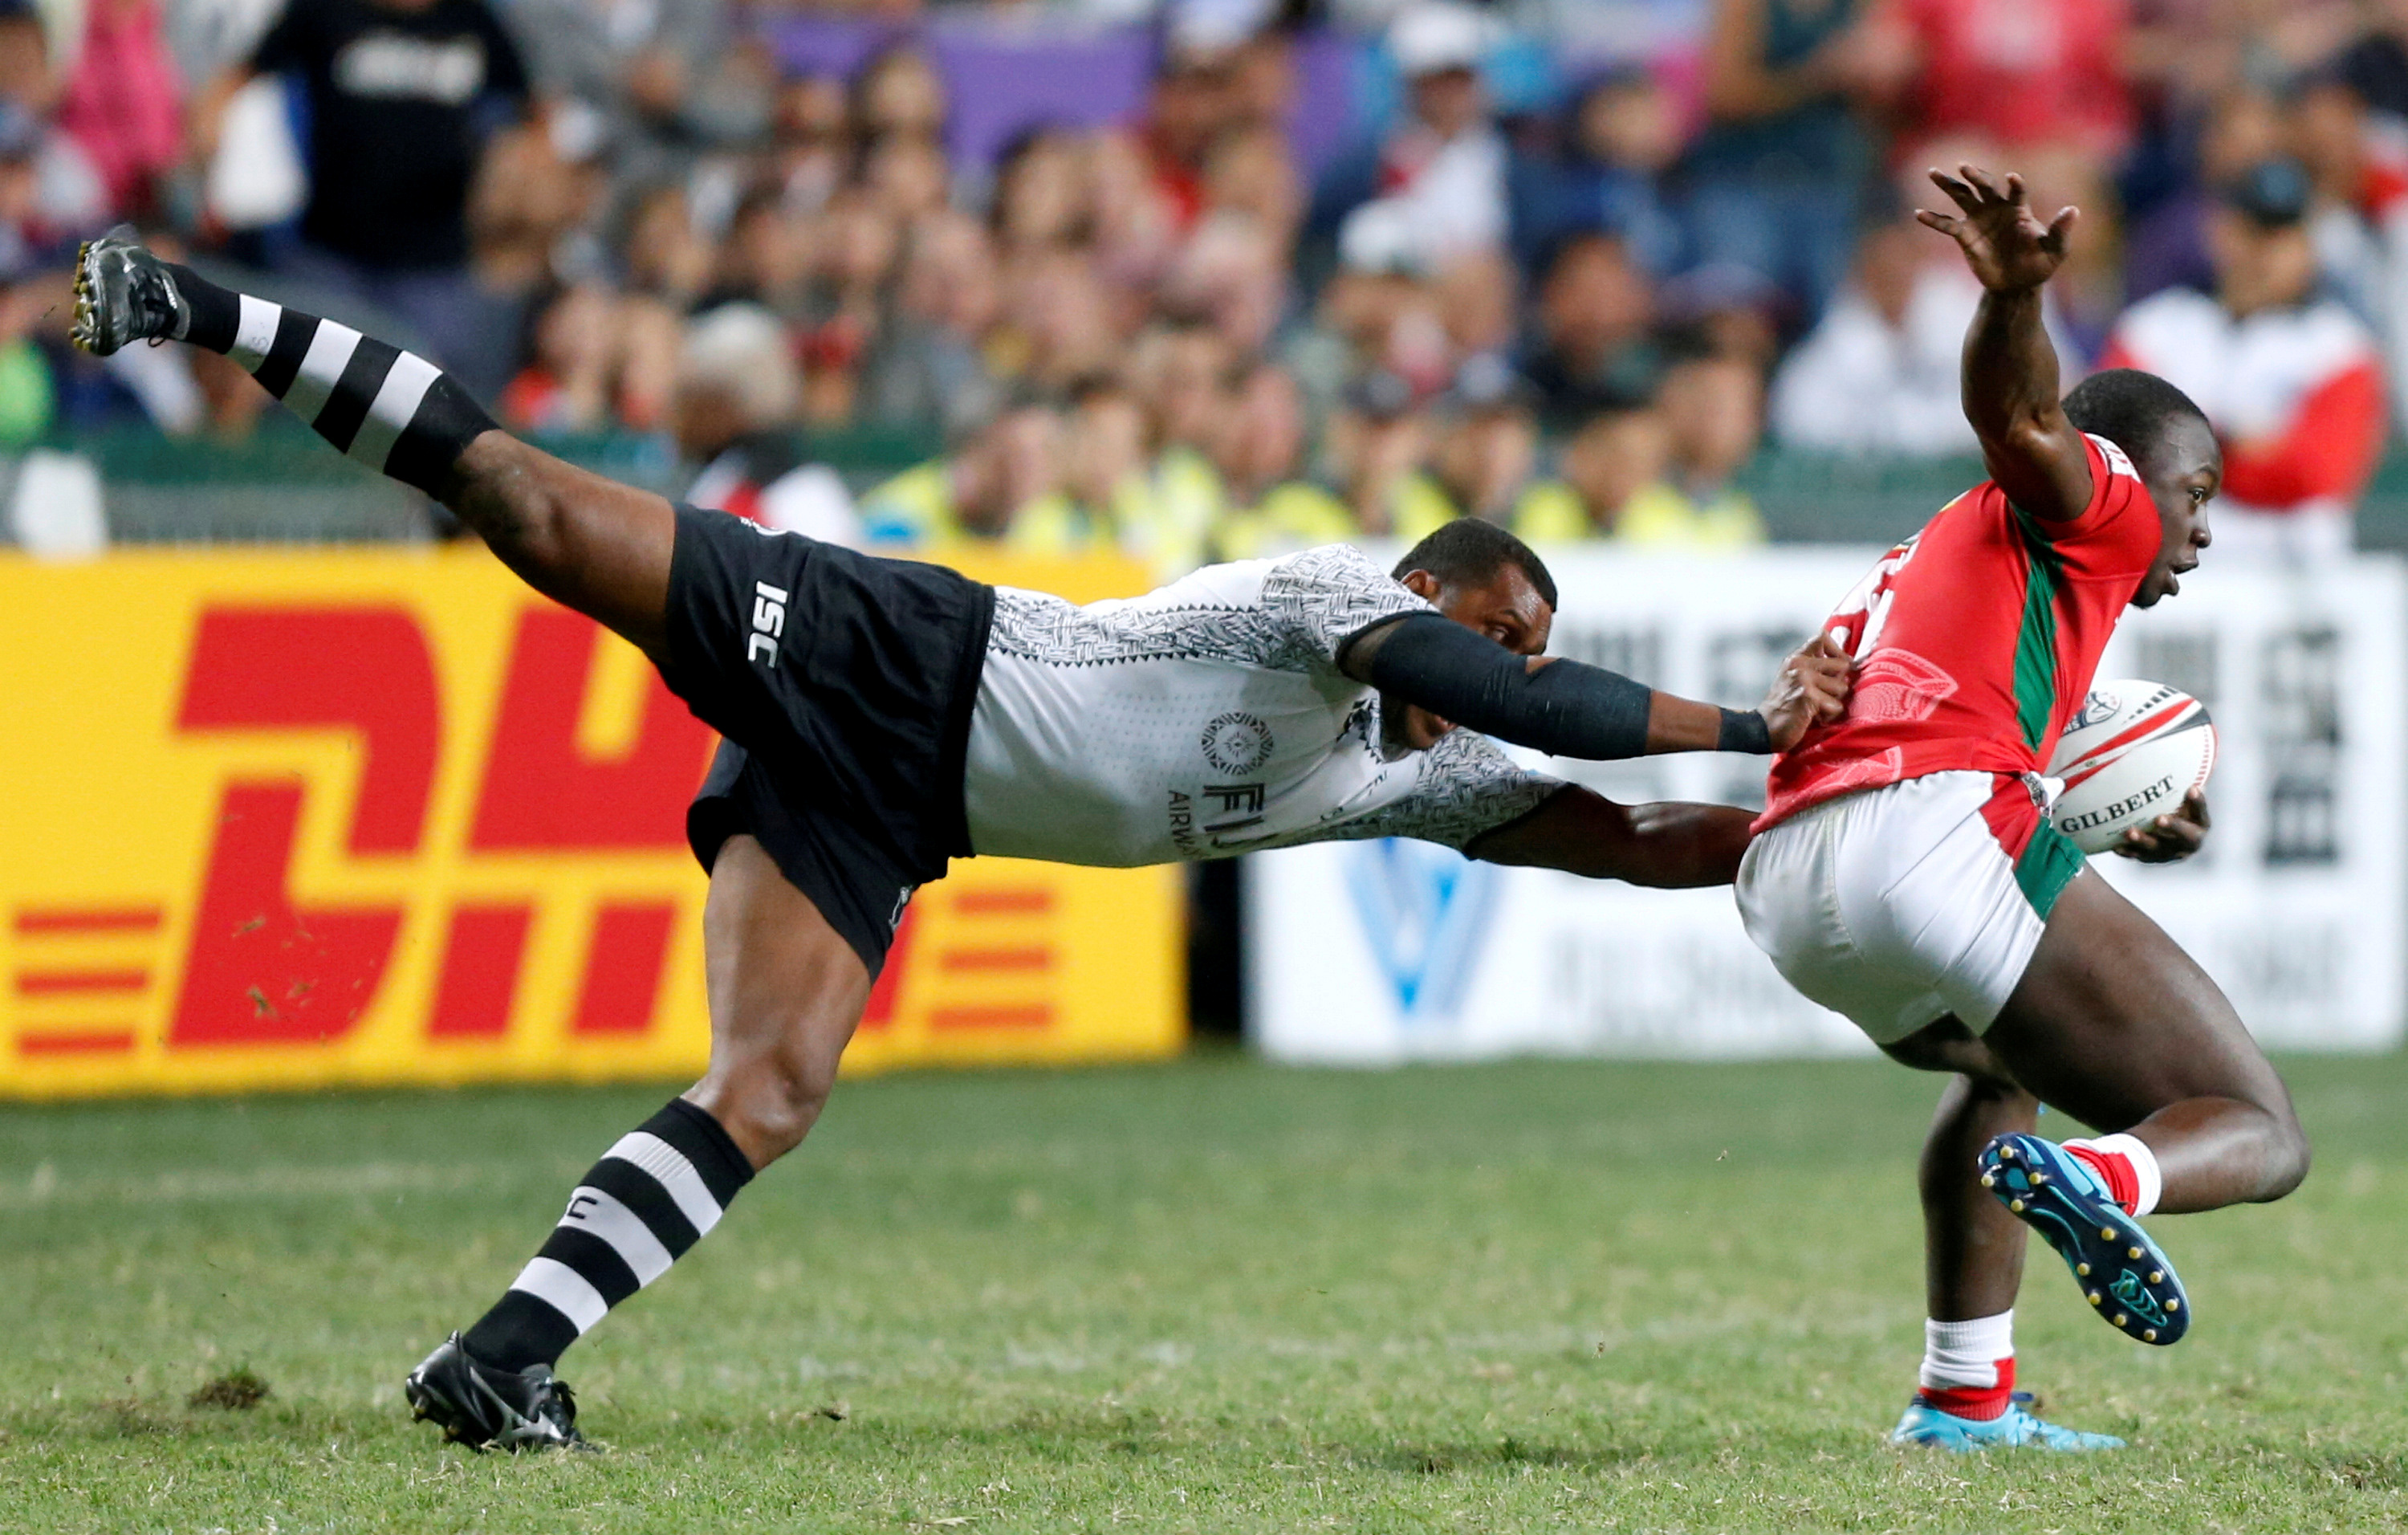 Rugby Union - Fiji v Kenya - World Rugby Sevens Series